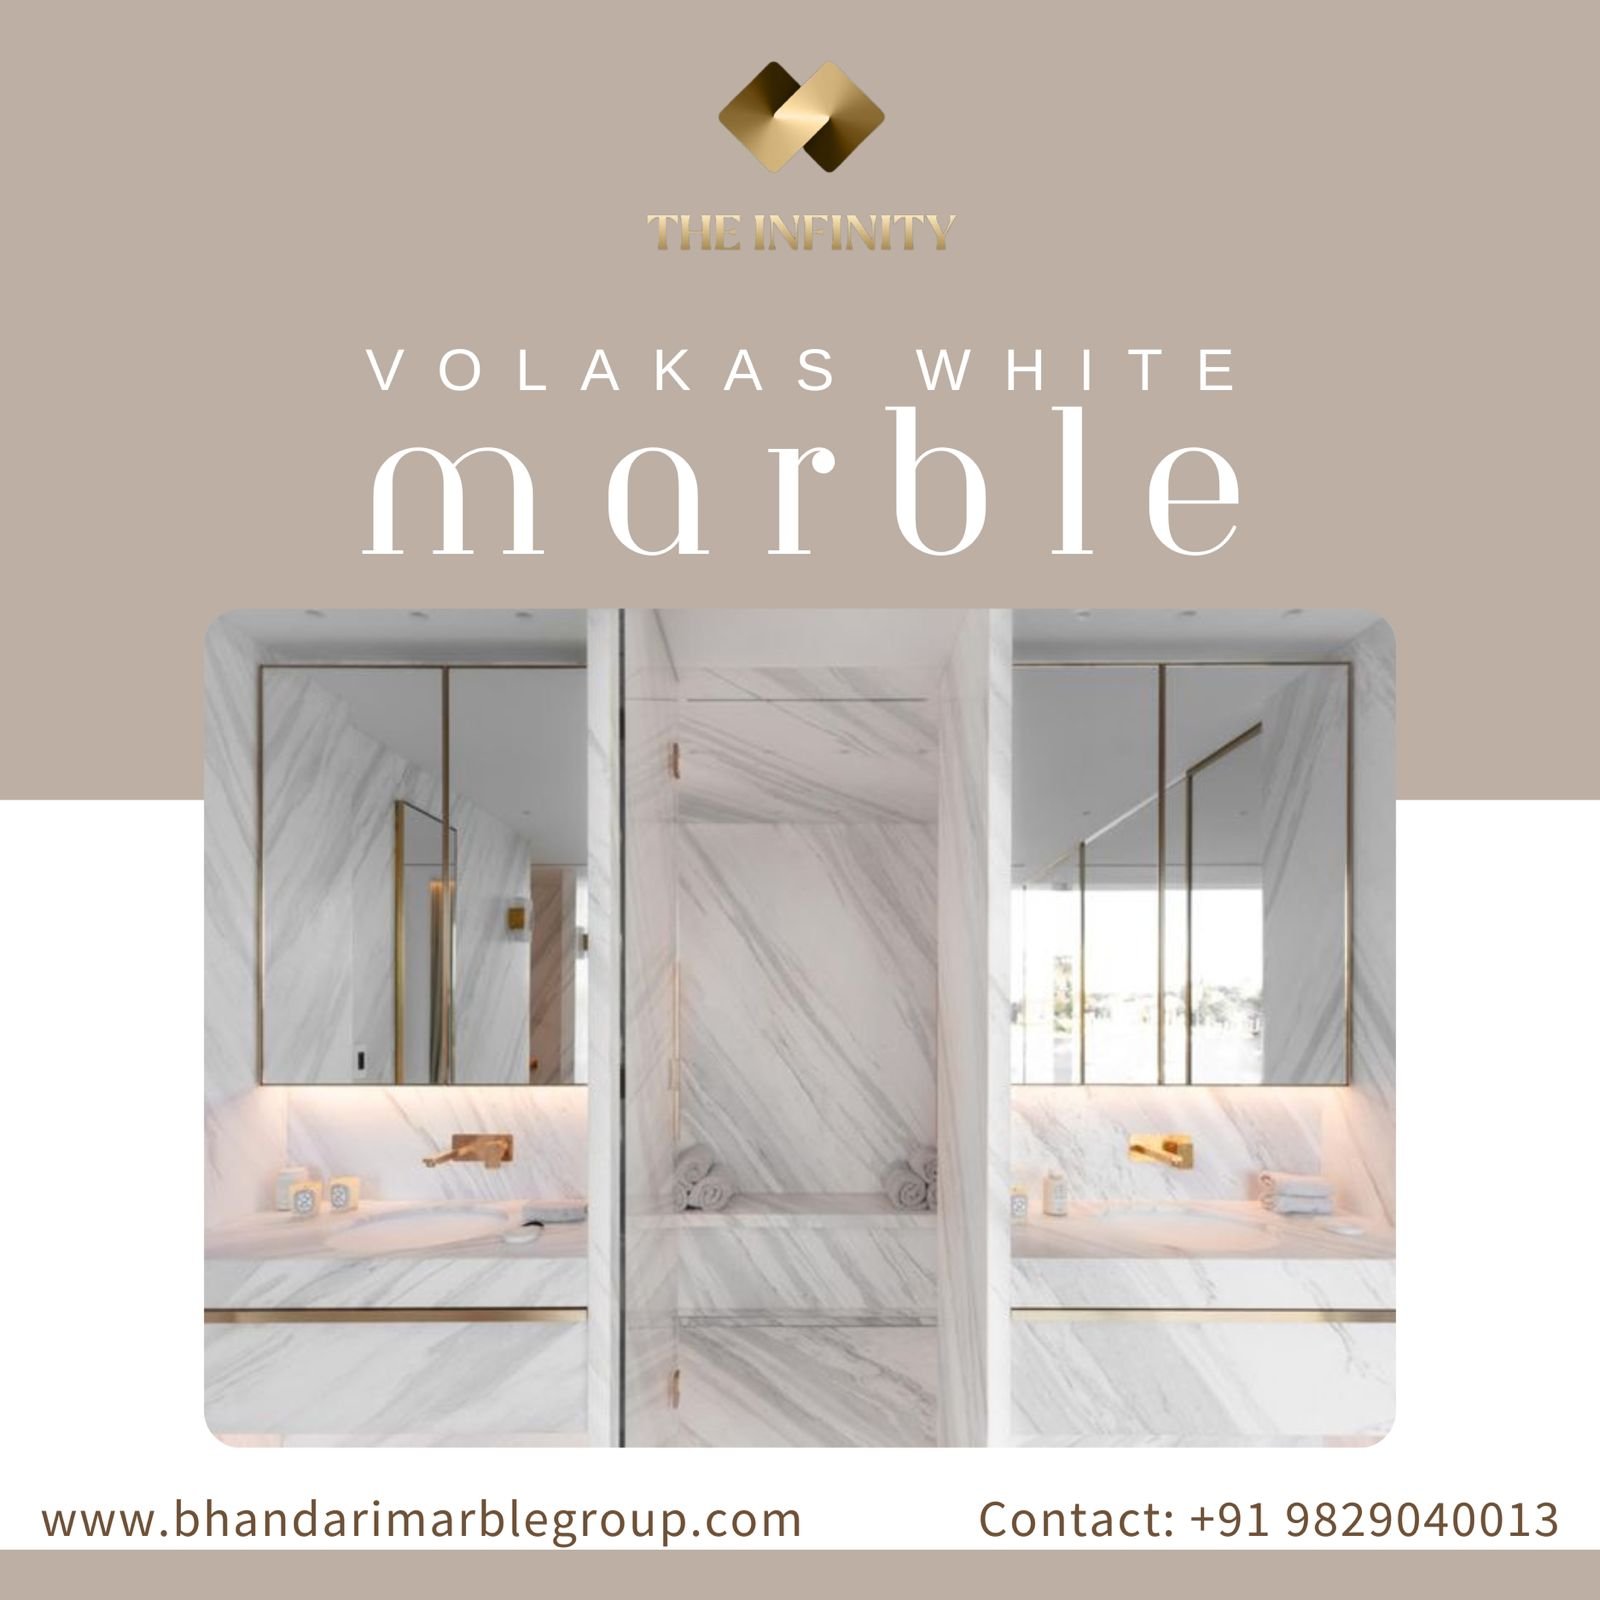 Volakas White Marble price